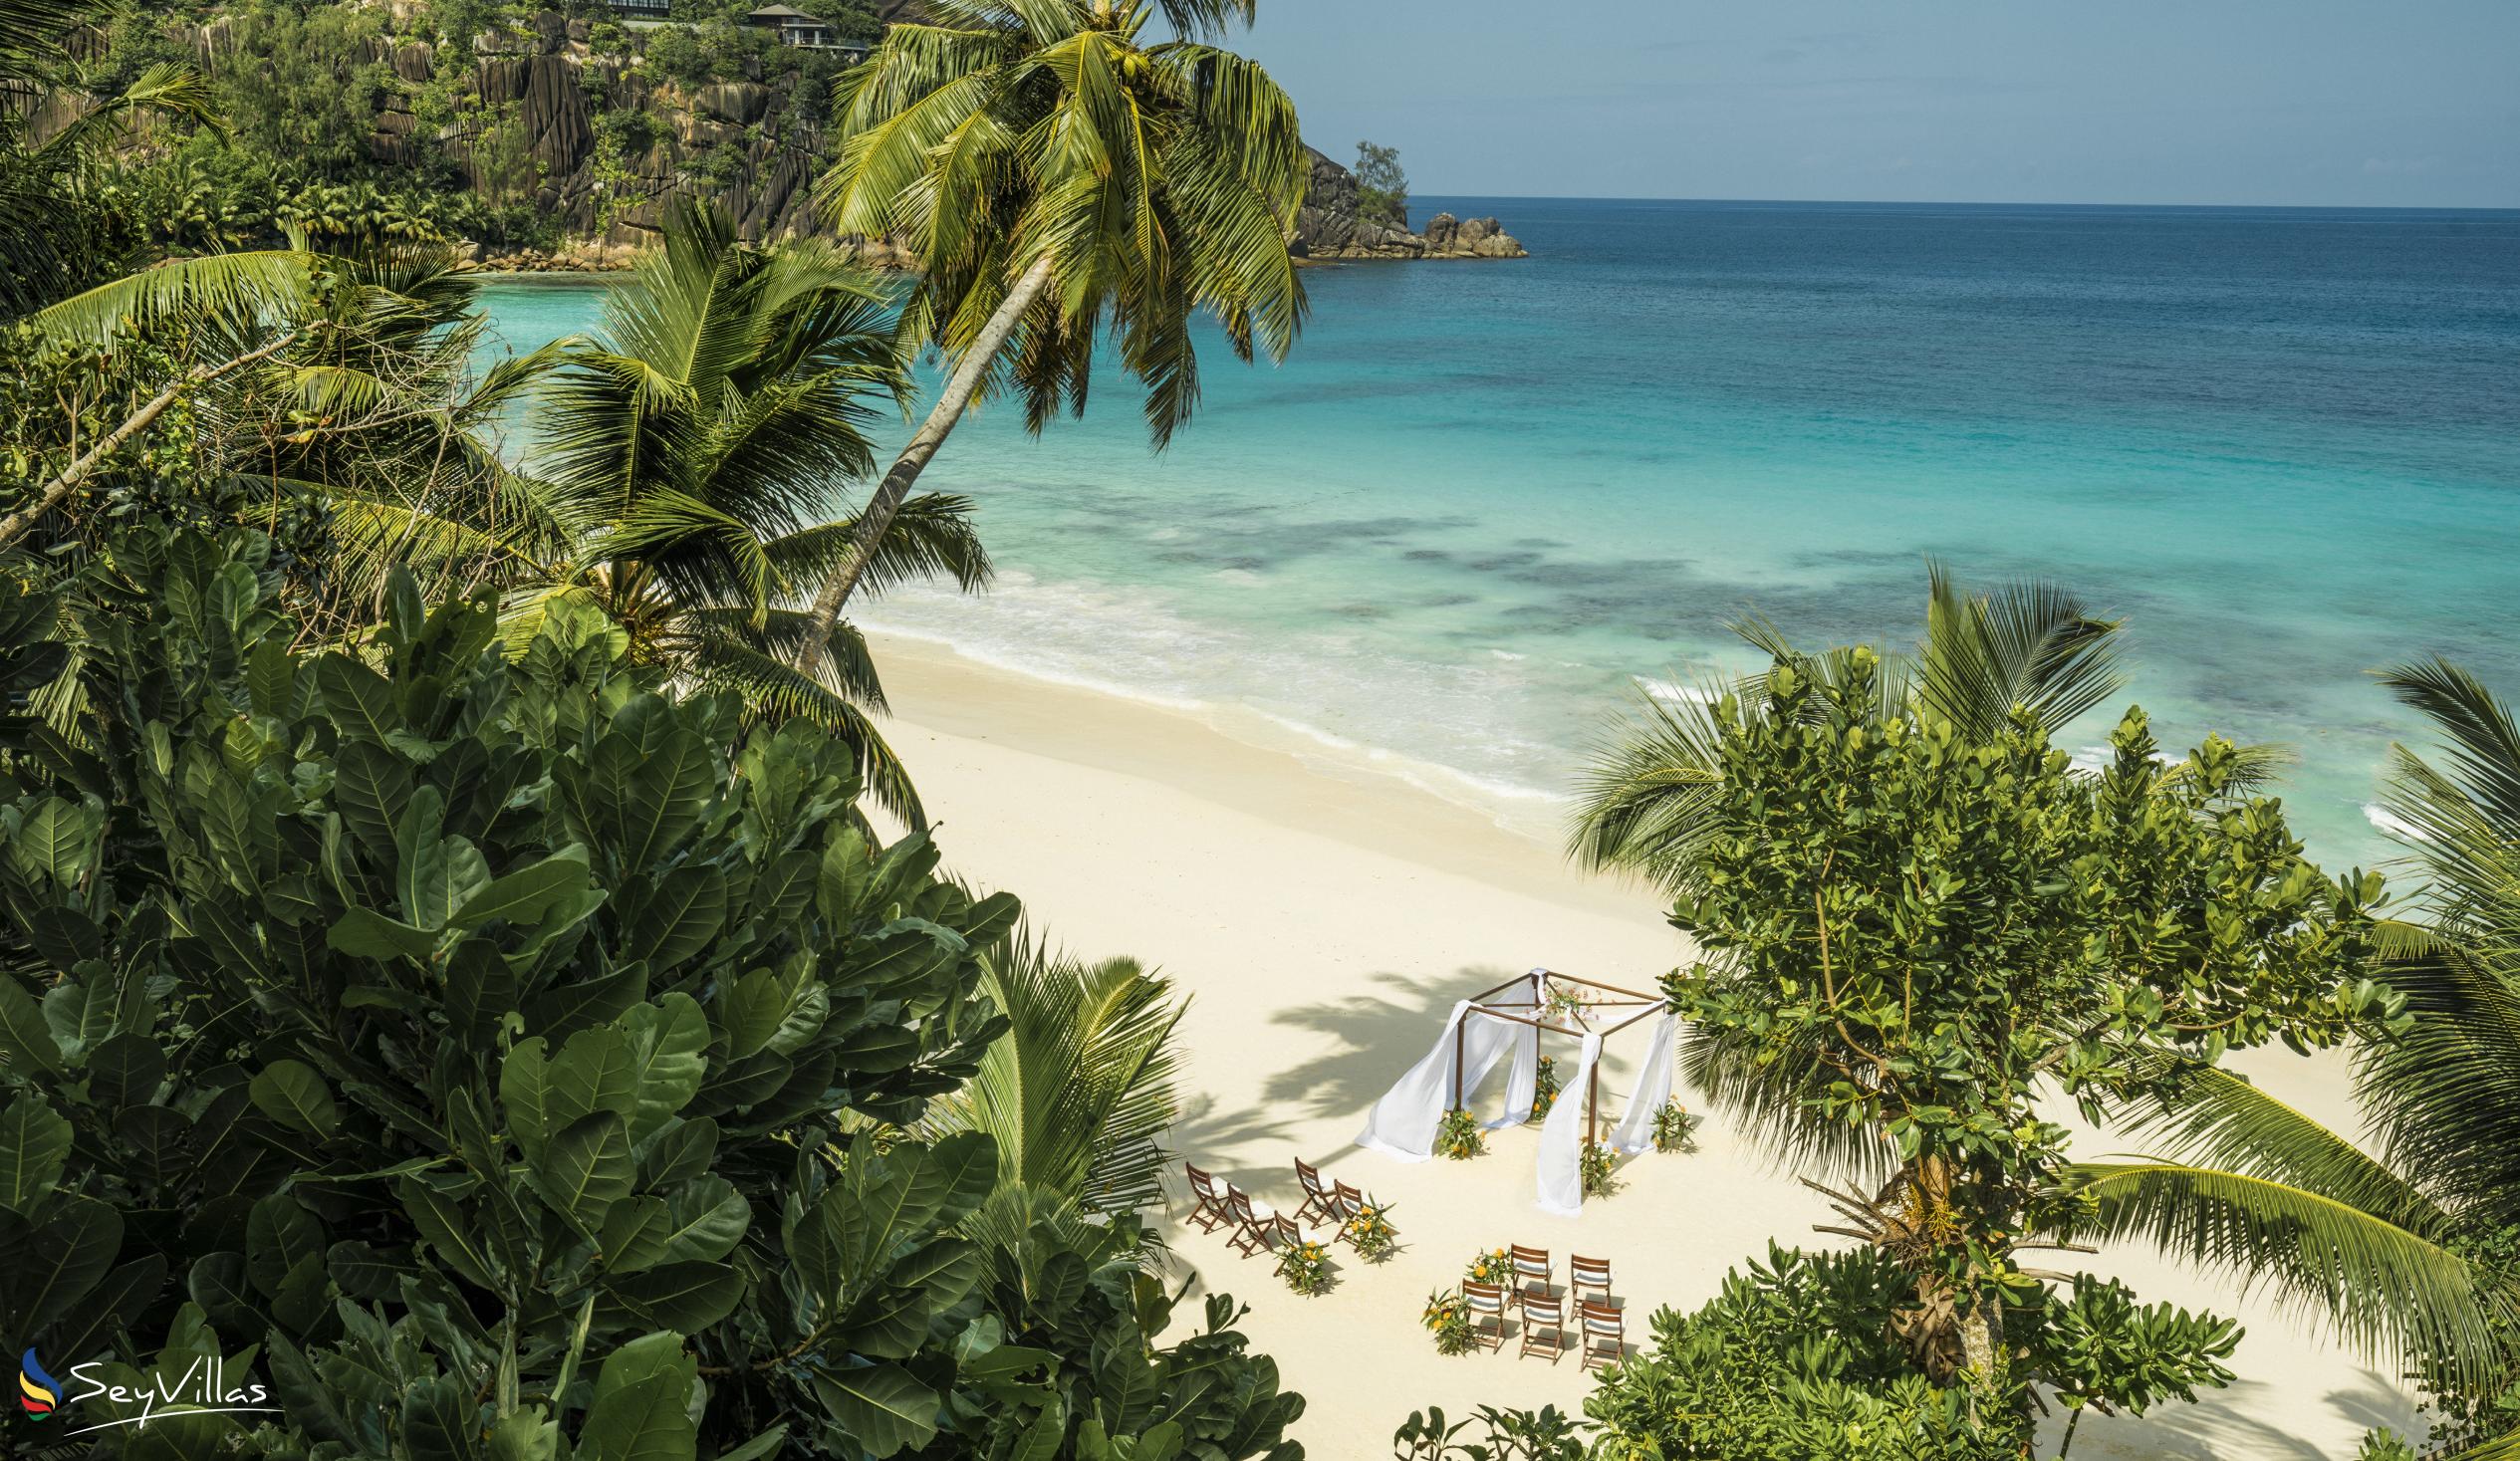 Photo 126: Four Seasons Resort - Outdoor area - Mahé (Seychelles)